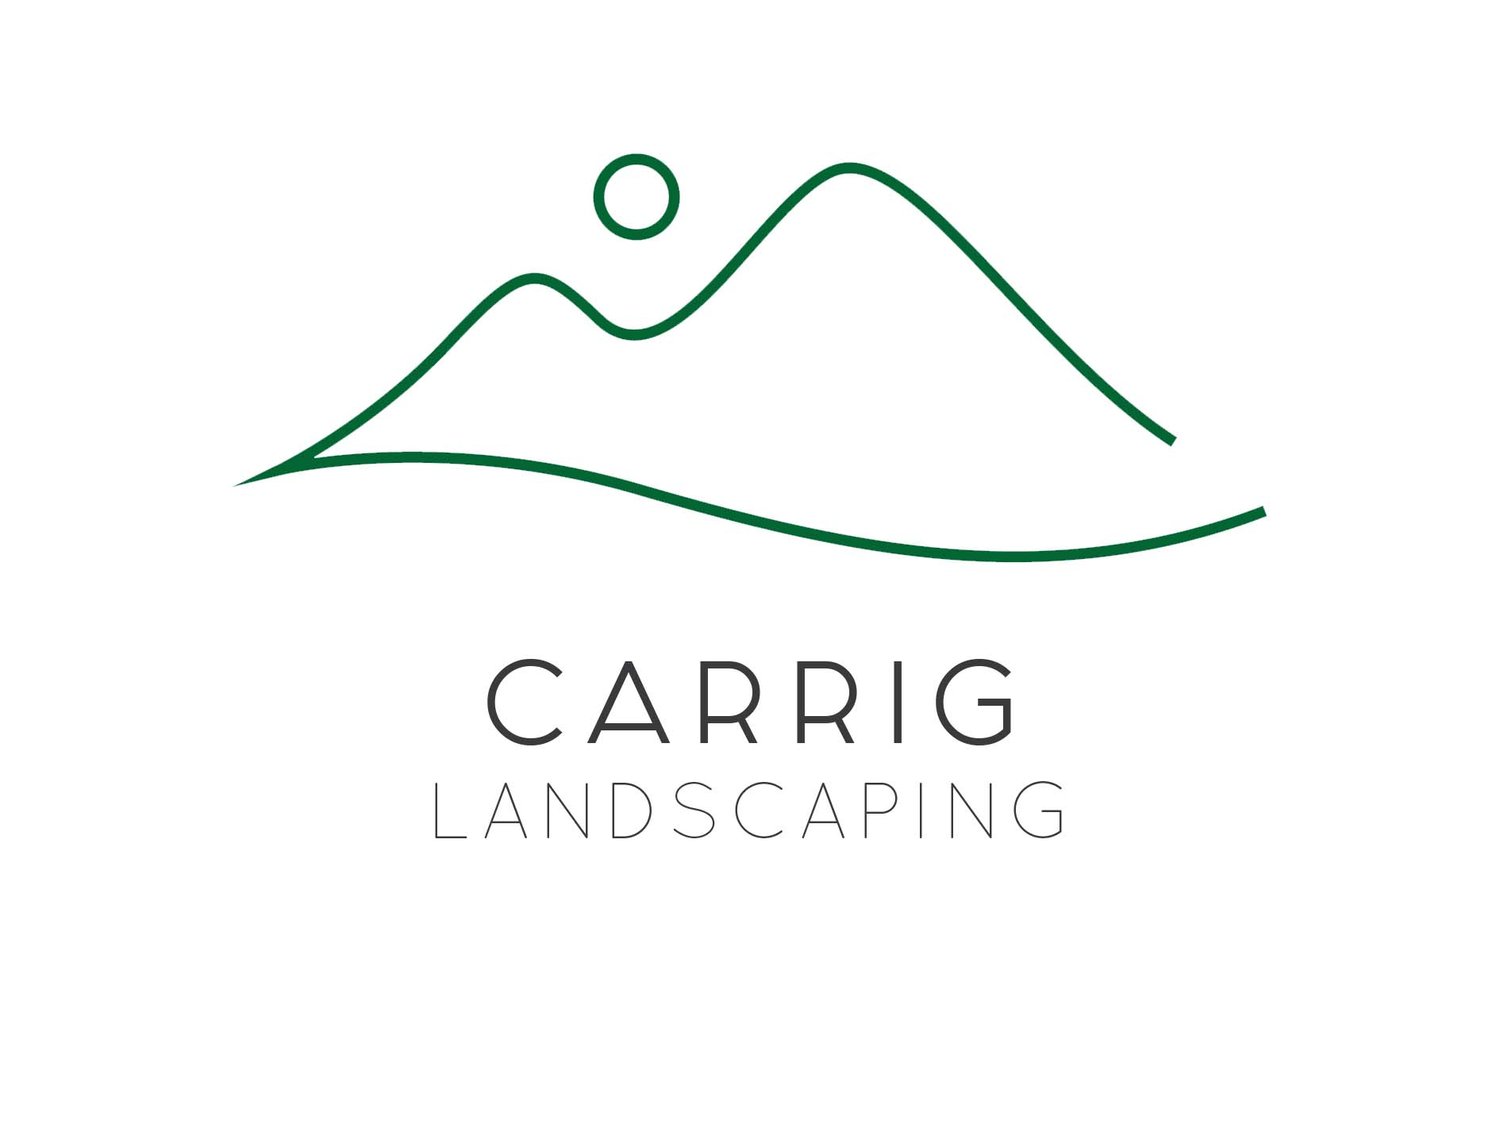 Carrig Landscaping